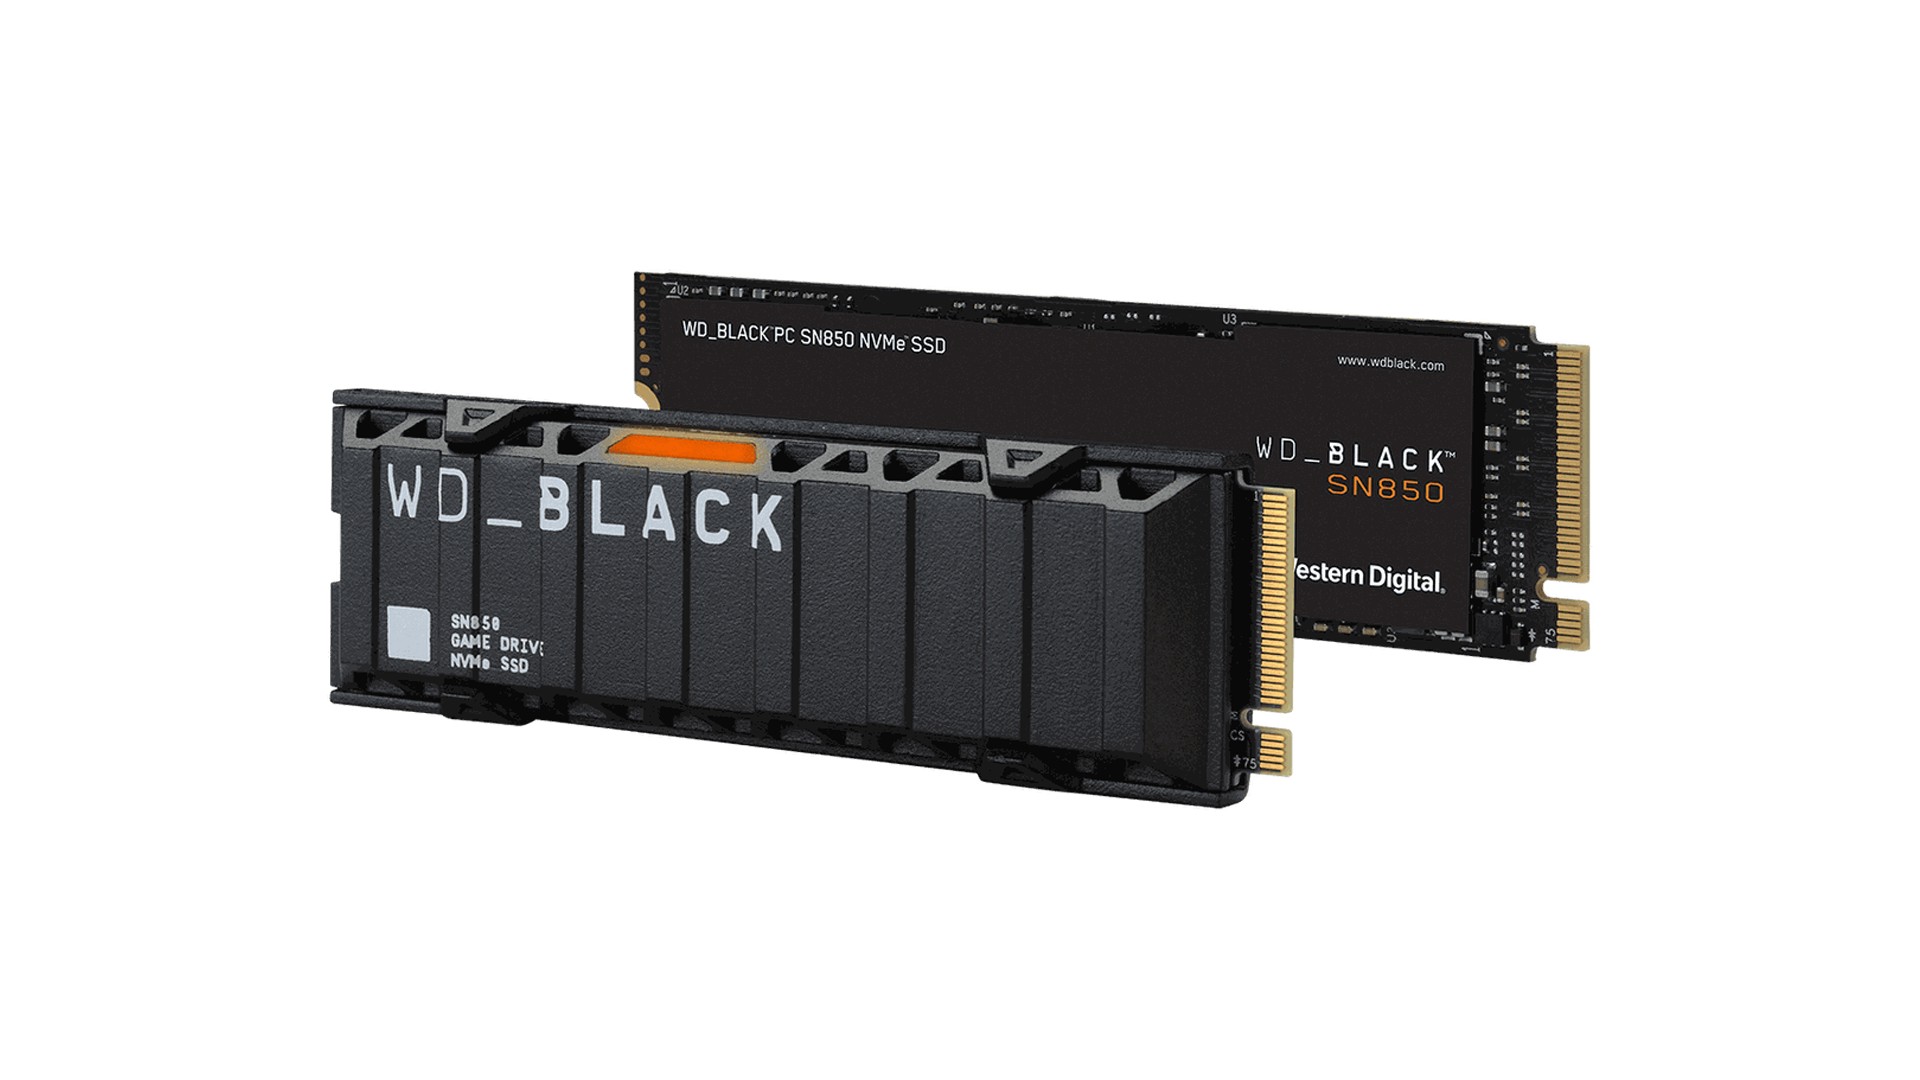 Ssd price. WD Black sn850. WD Black sn850 1tb. Western Digital SSD WD Black sn850 500gb. SSD WD Black sn850 упаковка.